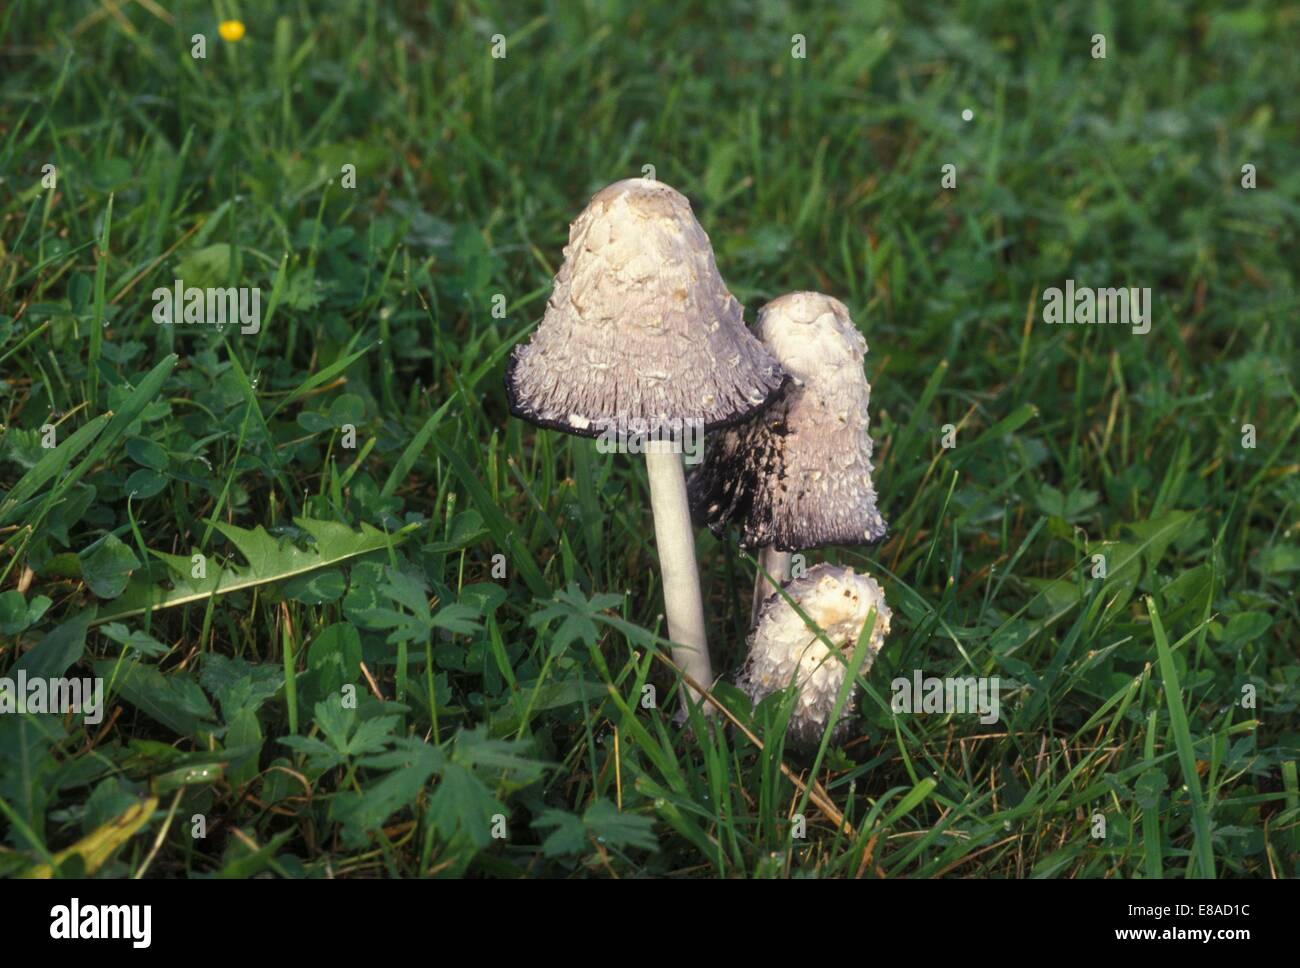 Shaggy Inkcap (Coprinus comatus - Agaricus comatus) in a meadow Stock Photo